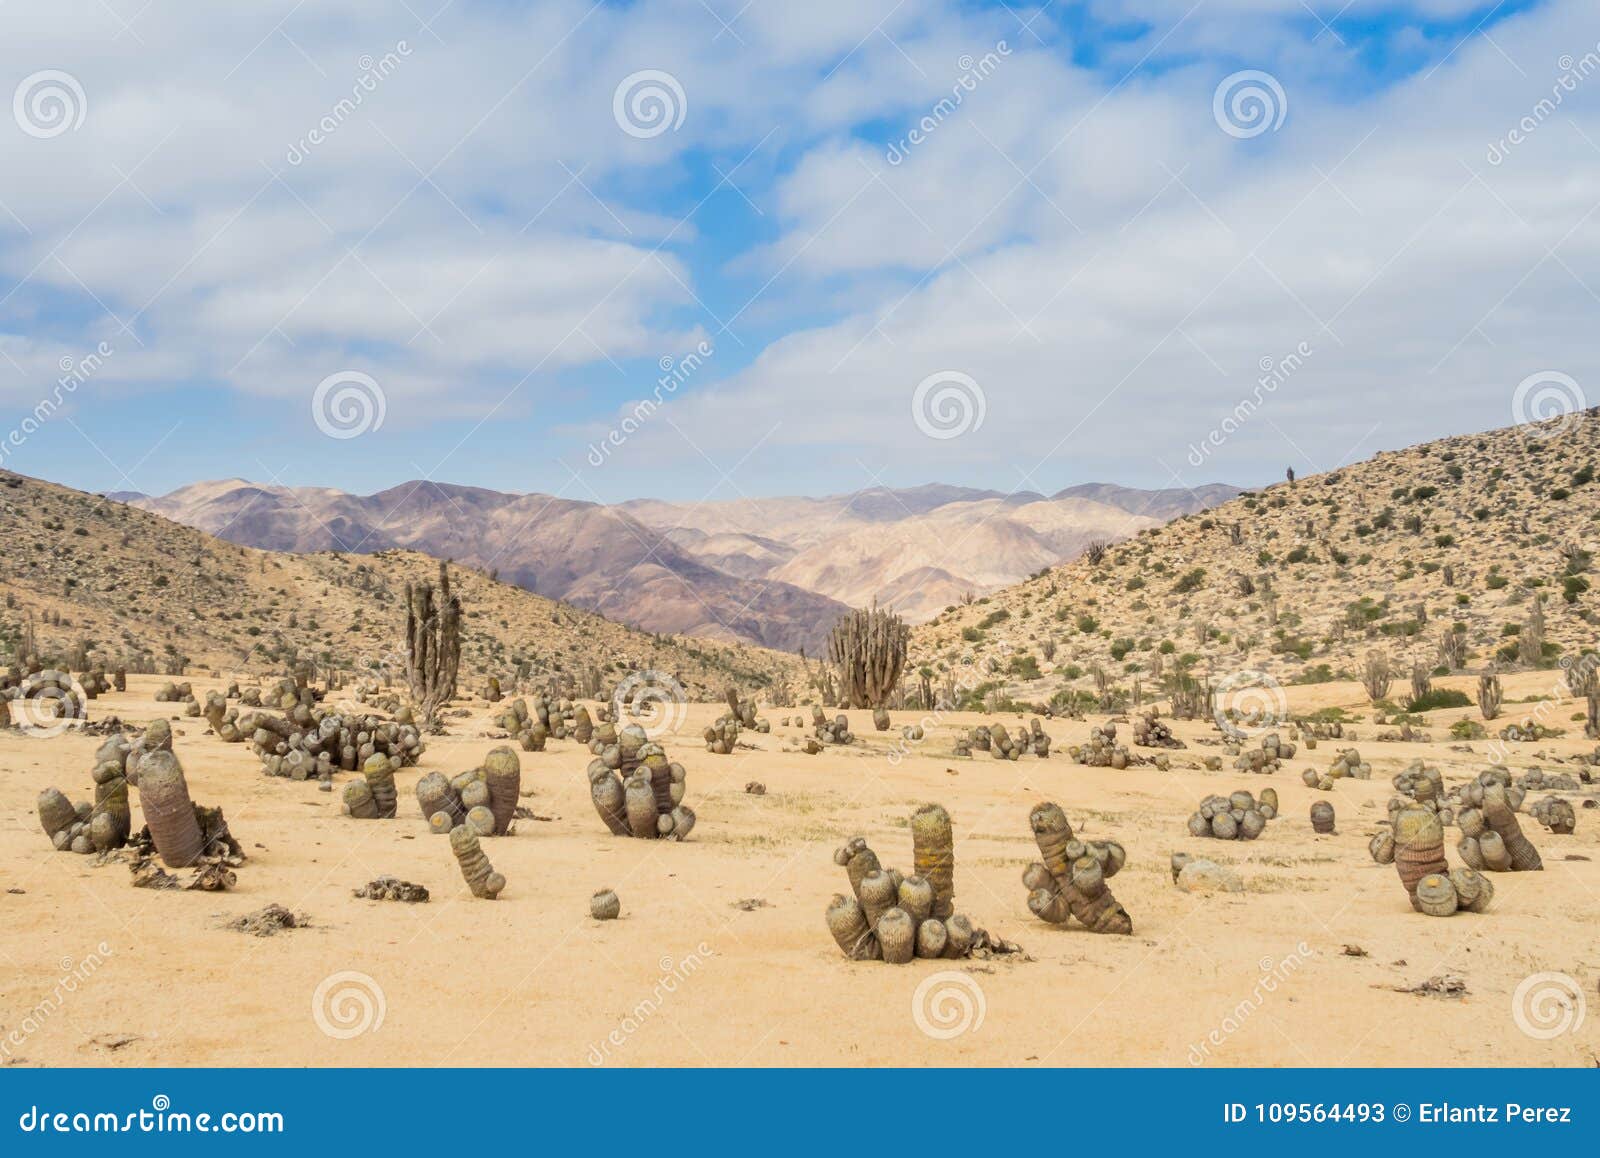 cactus in the atacama desert, pan de azucar national park in chile